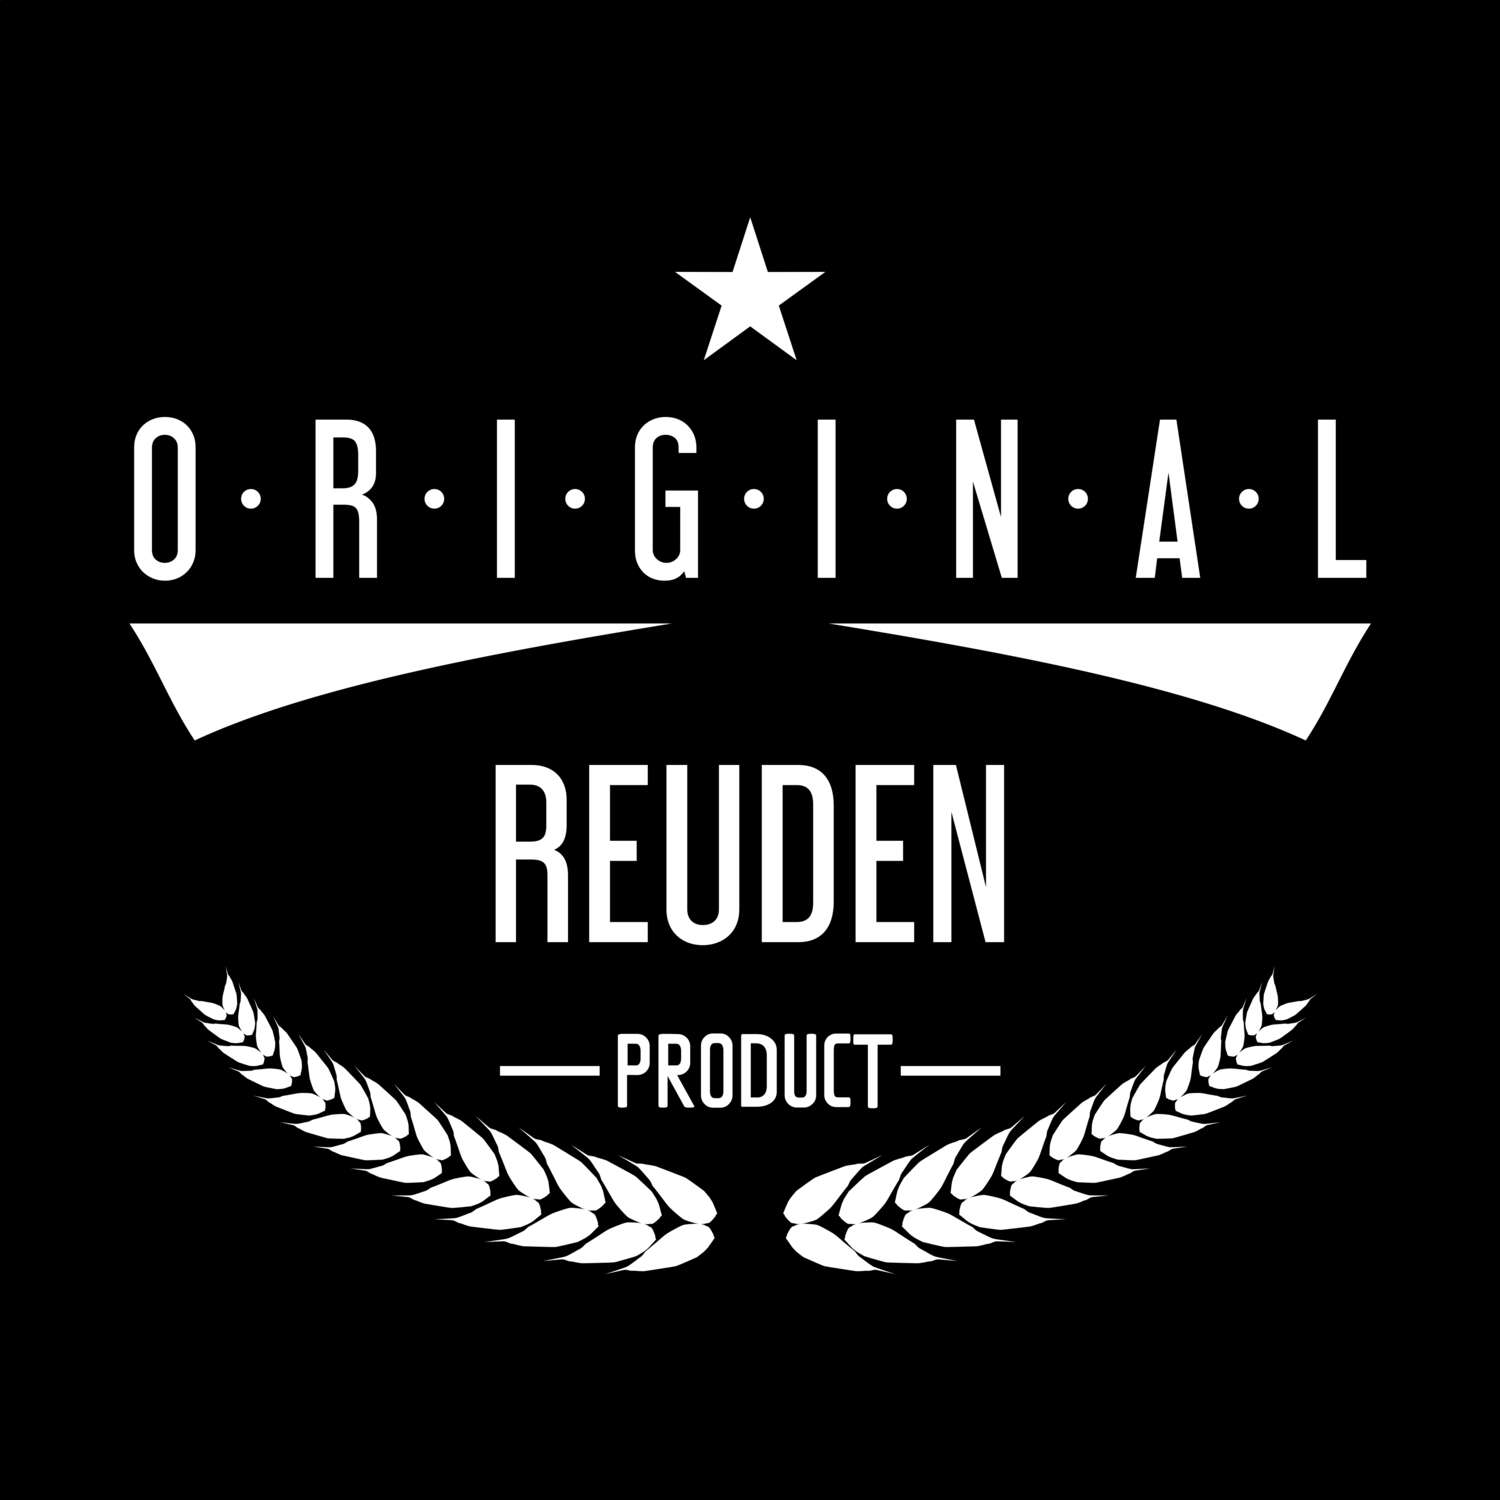 Reuden T-Shirt »Original Product«